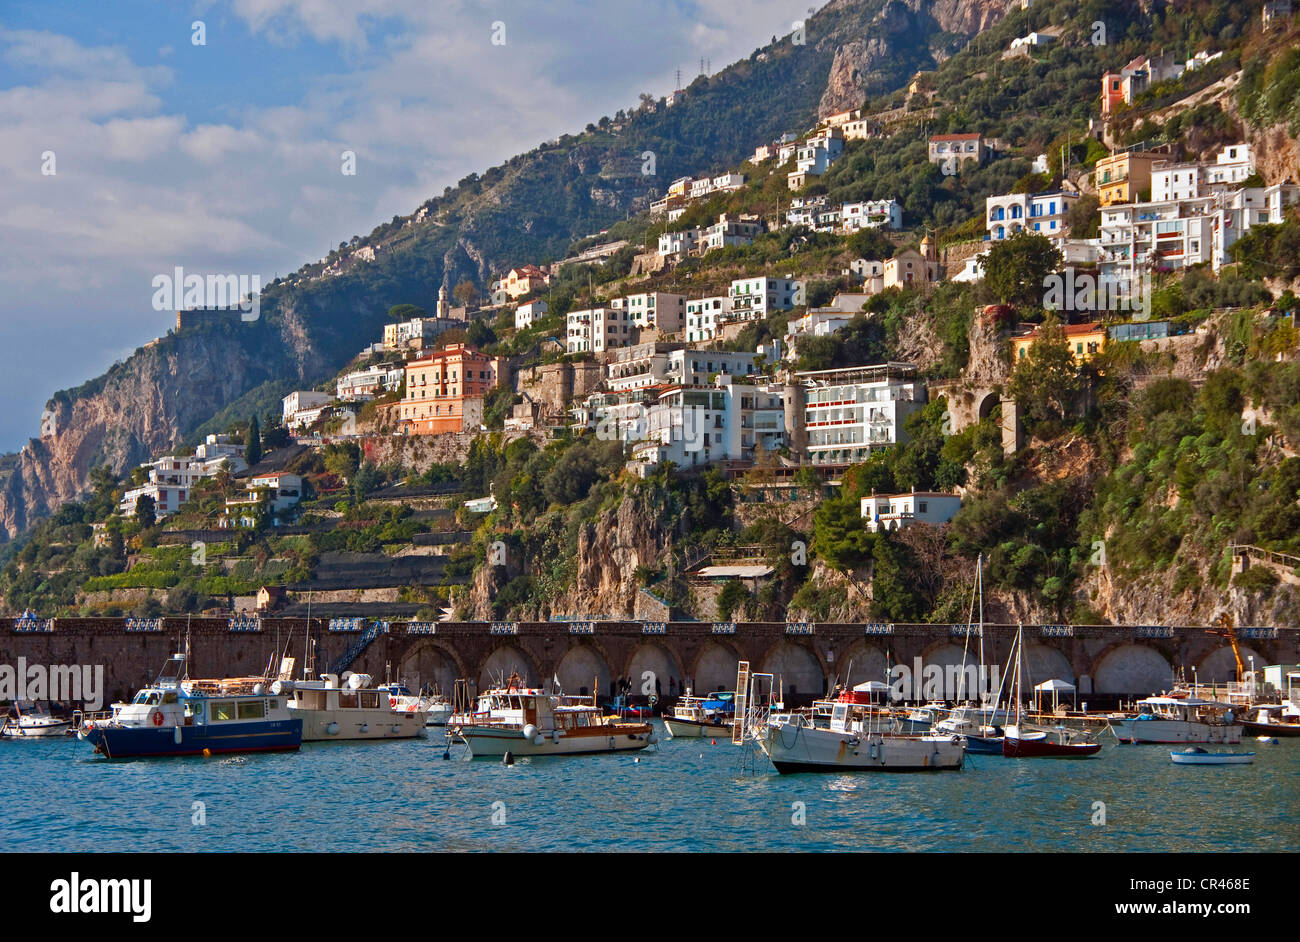 Italia: el puerto de Amalfi en la costa de Amalfi Foto de stock